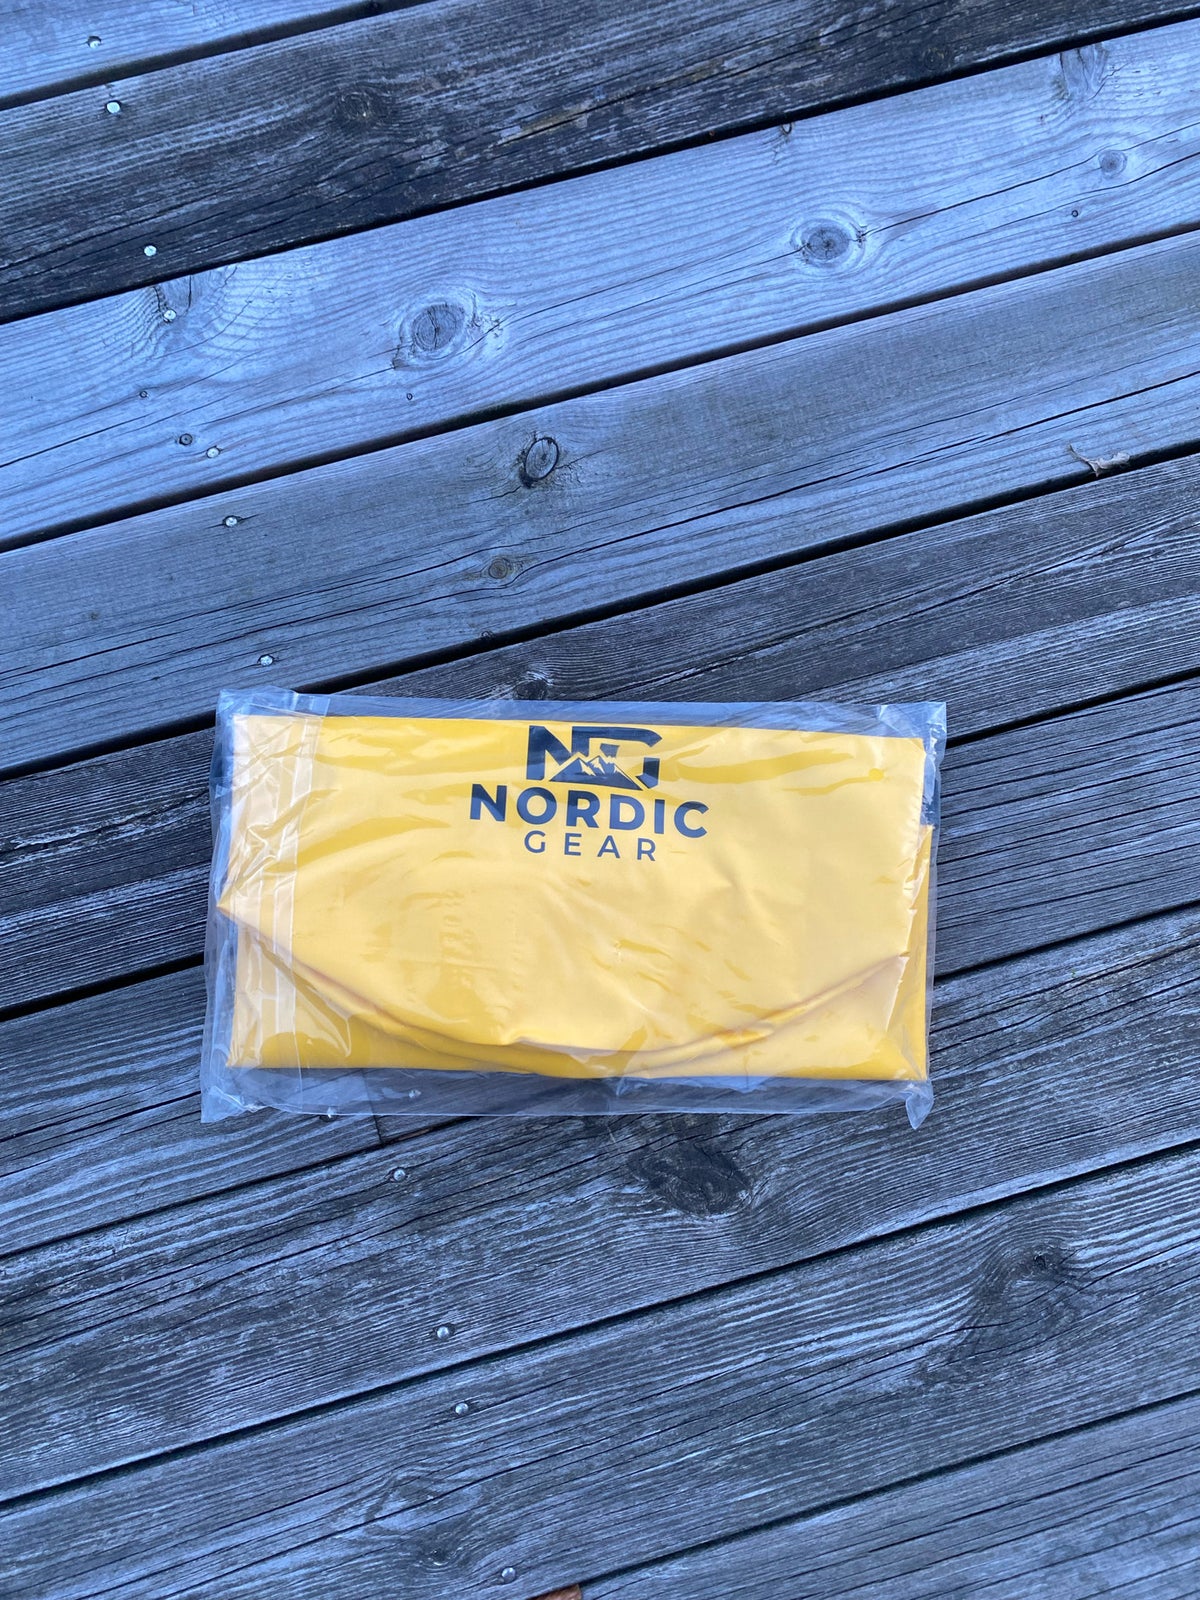 Drybag, Nordic Gear